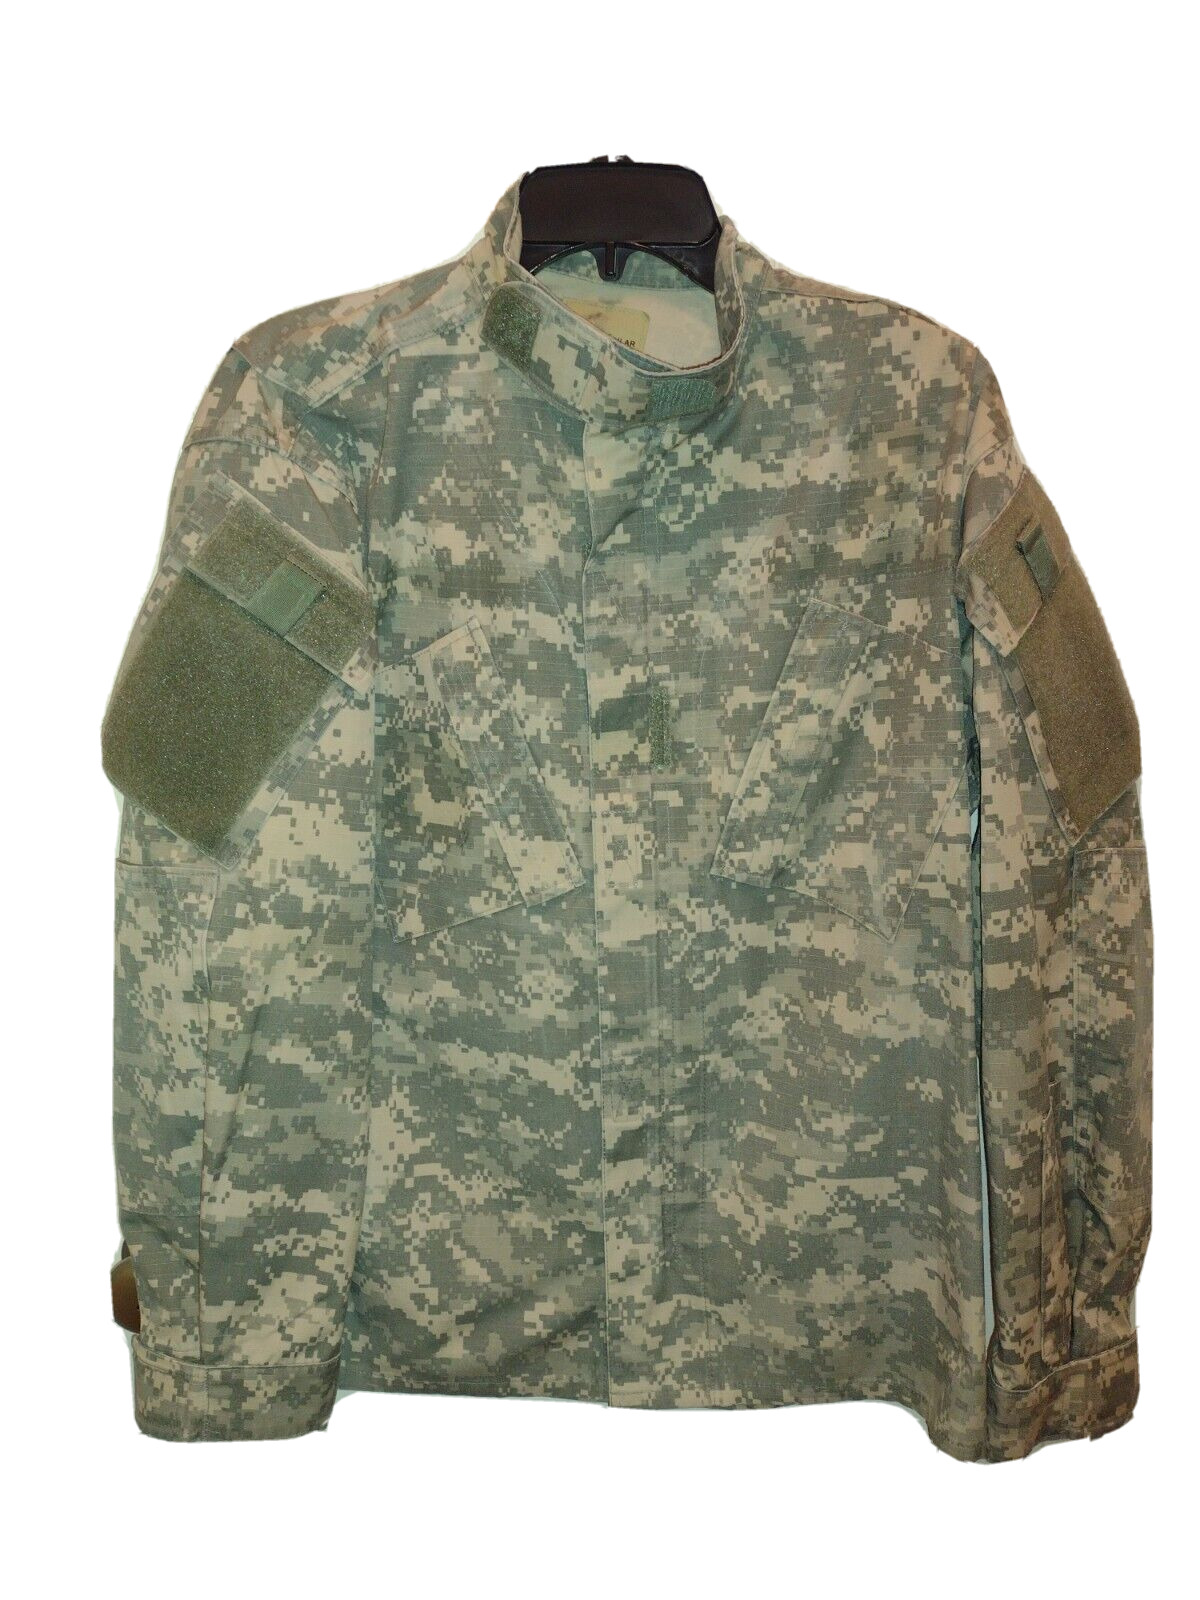 US Army Buzz Off Men's Size Small Regular Camo Jacket